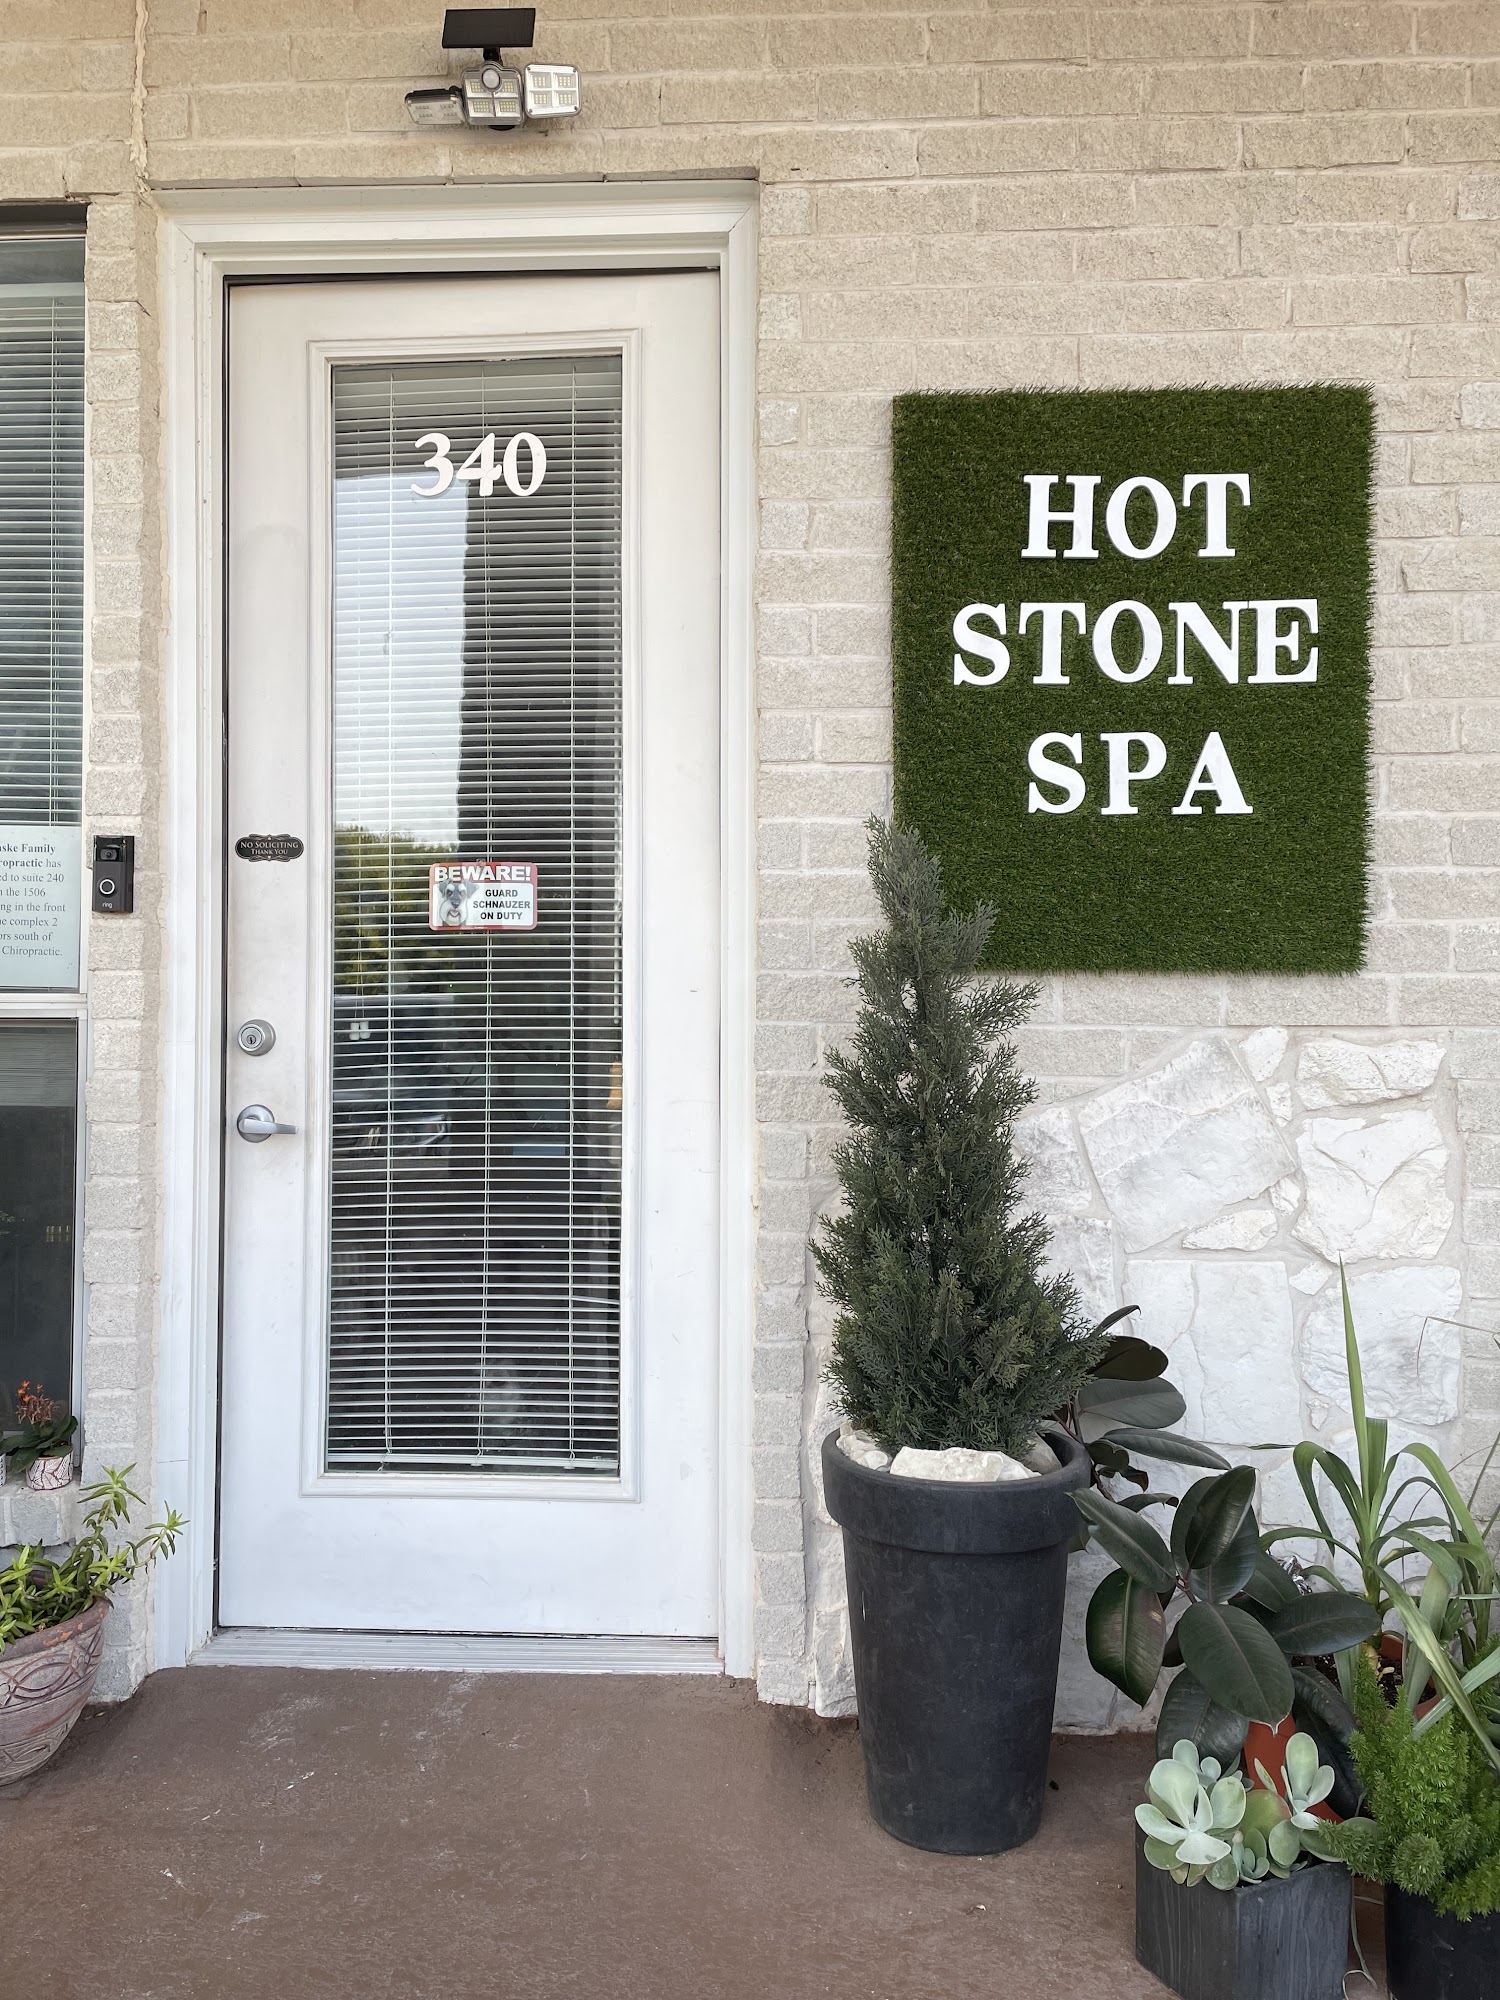 Hot Stone Spa (FSA & HSA accepted)